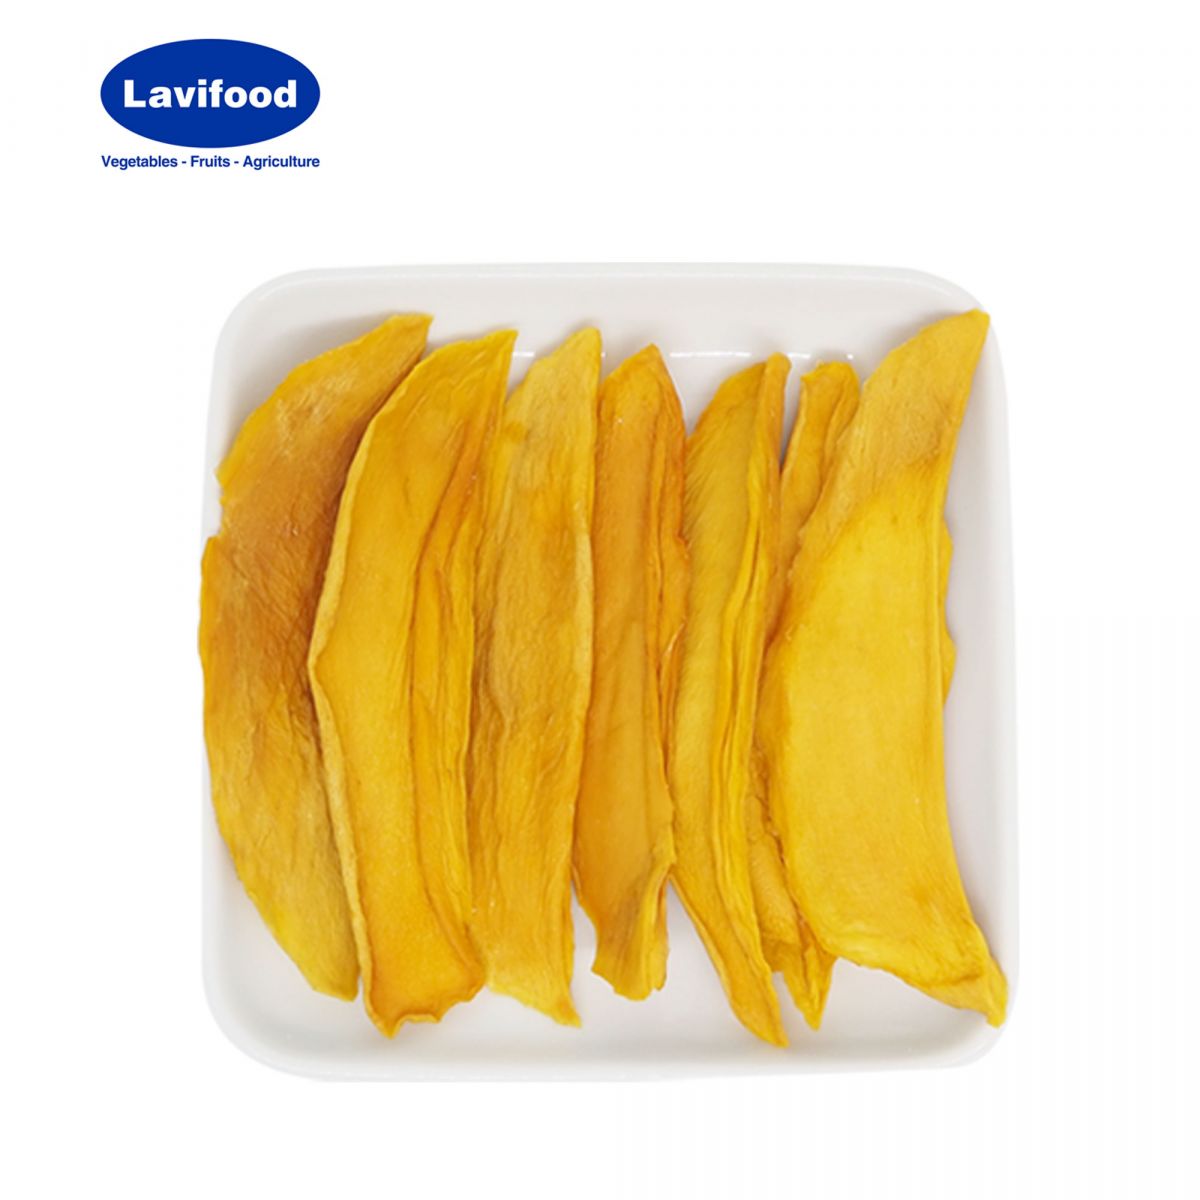 https://lavifood.com/en/products/dried-fruit-vegetables/dried-mango